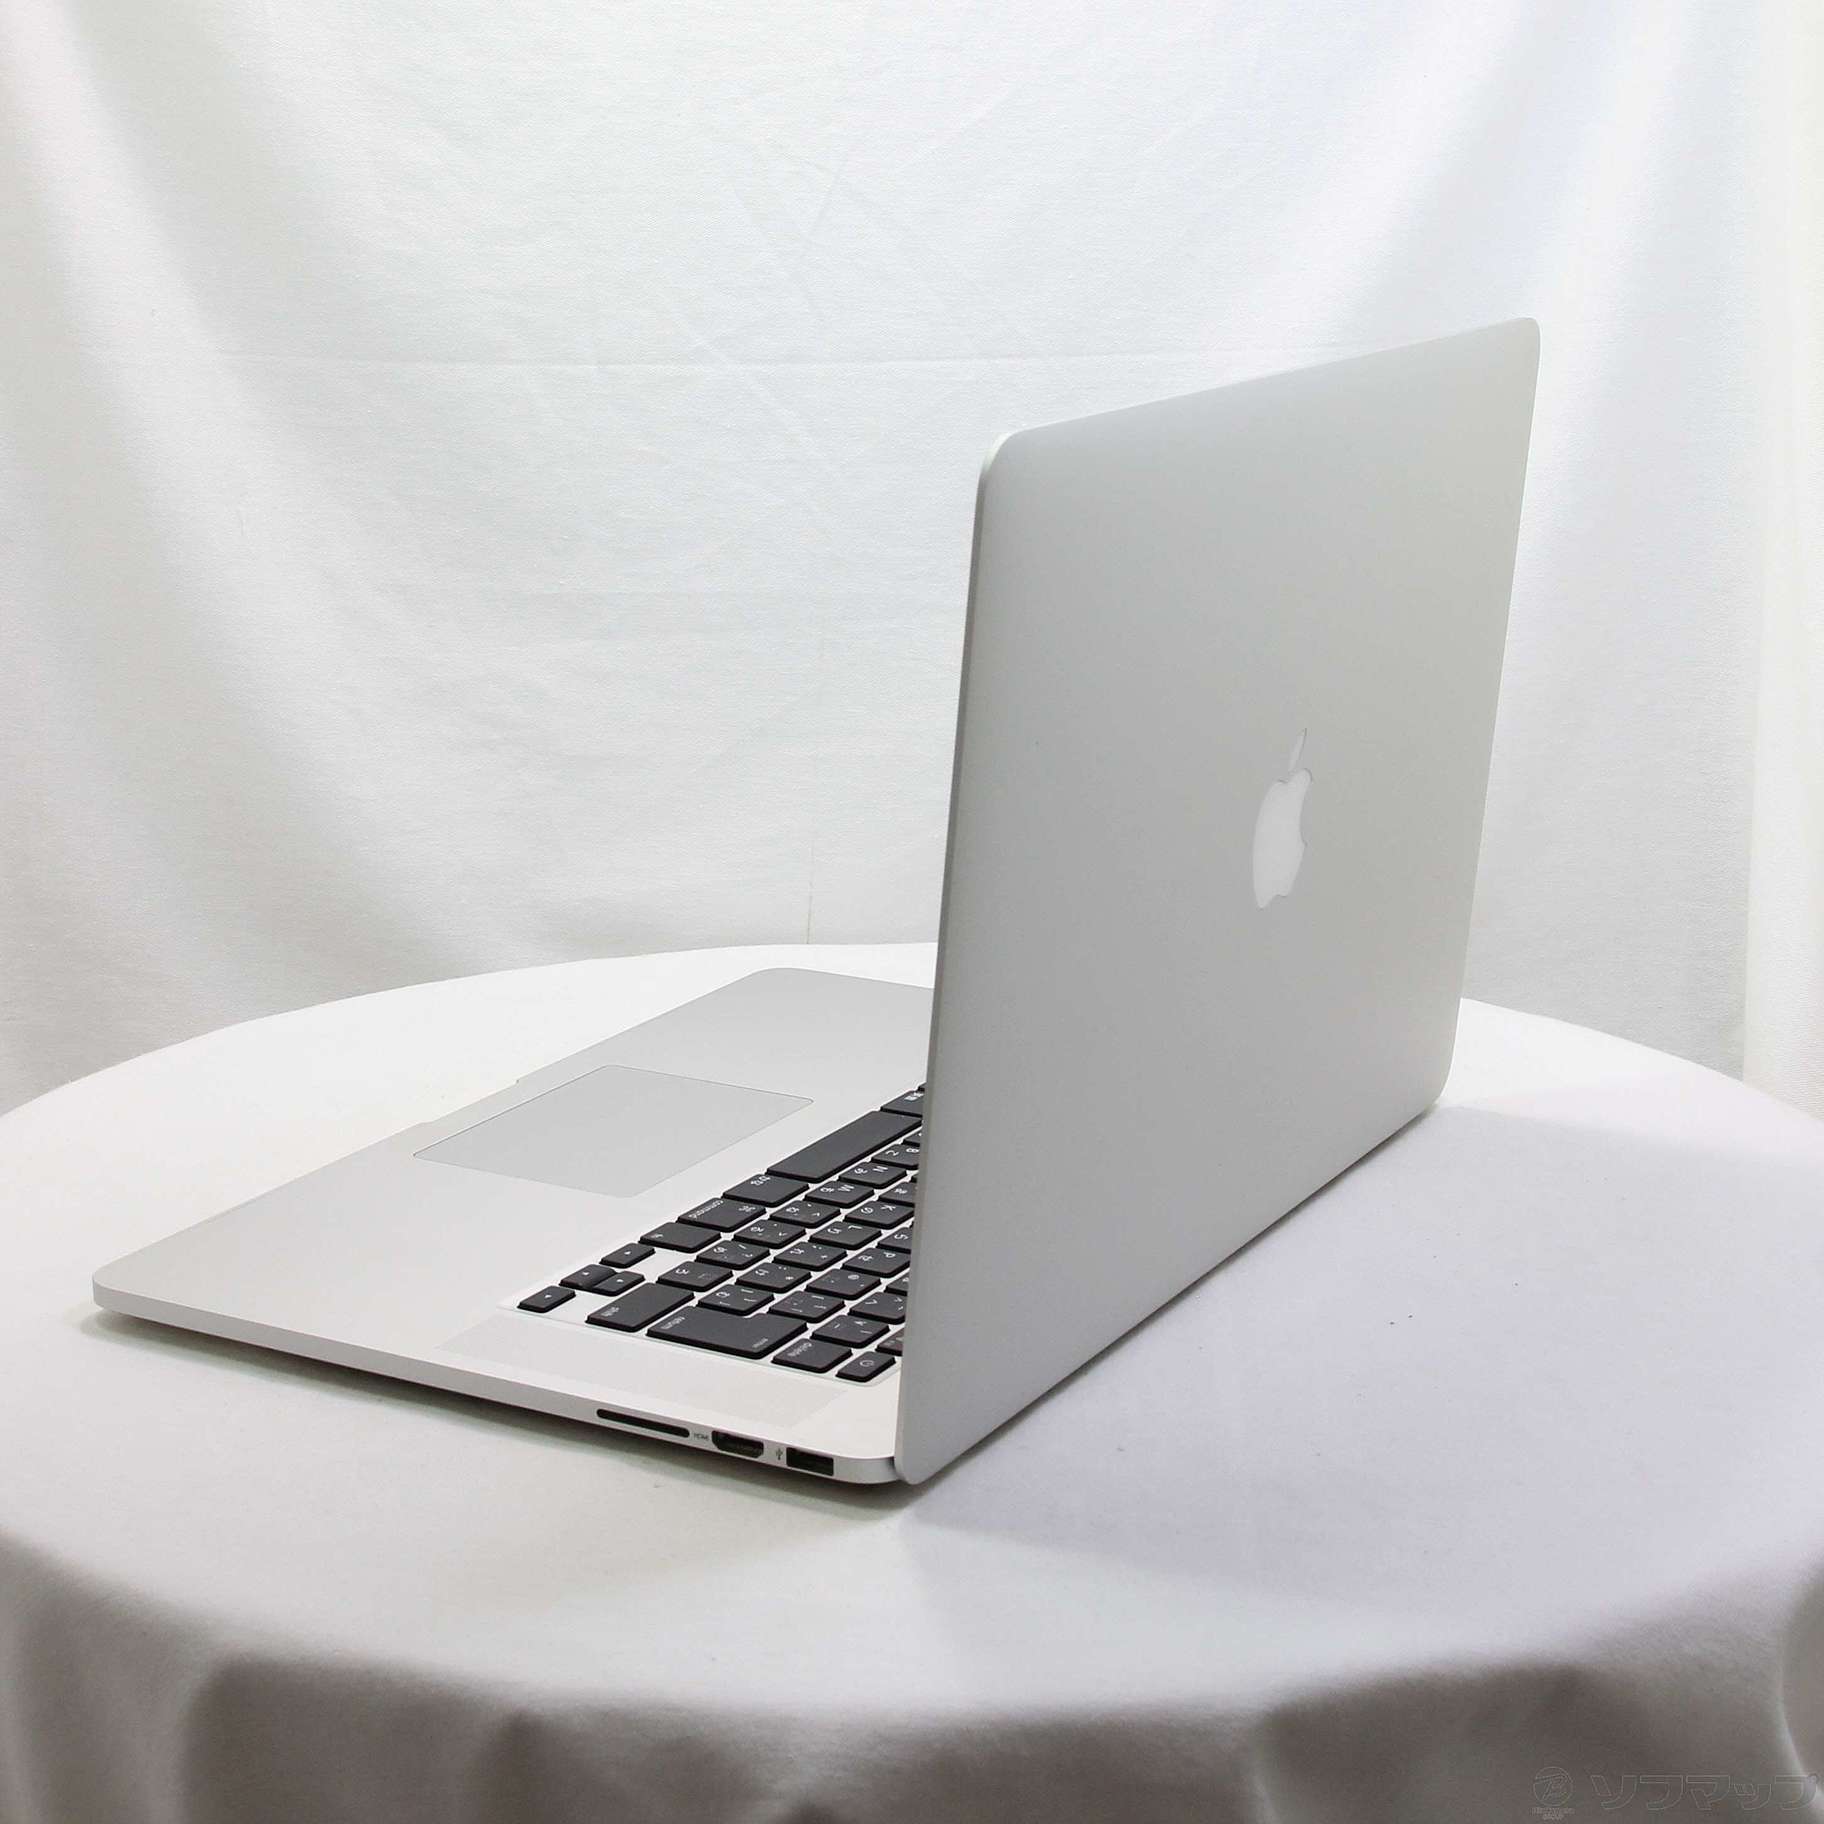 中古品〕 MacBook Pro 15-inch Mid 2012 MC975J／A Core_i7 2.3GHz 8GB ...